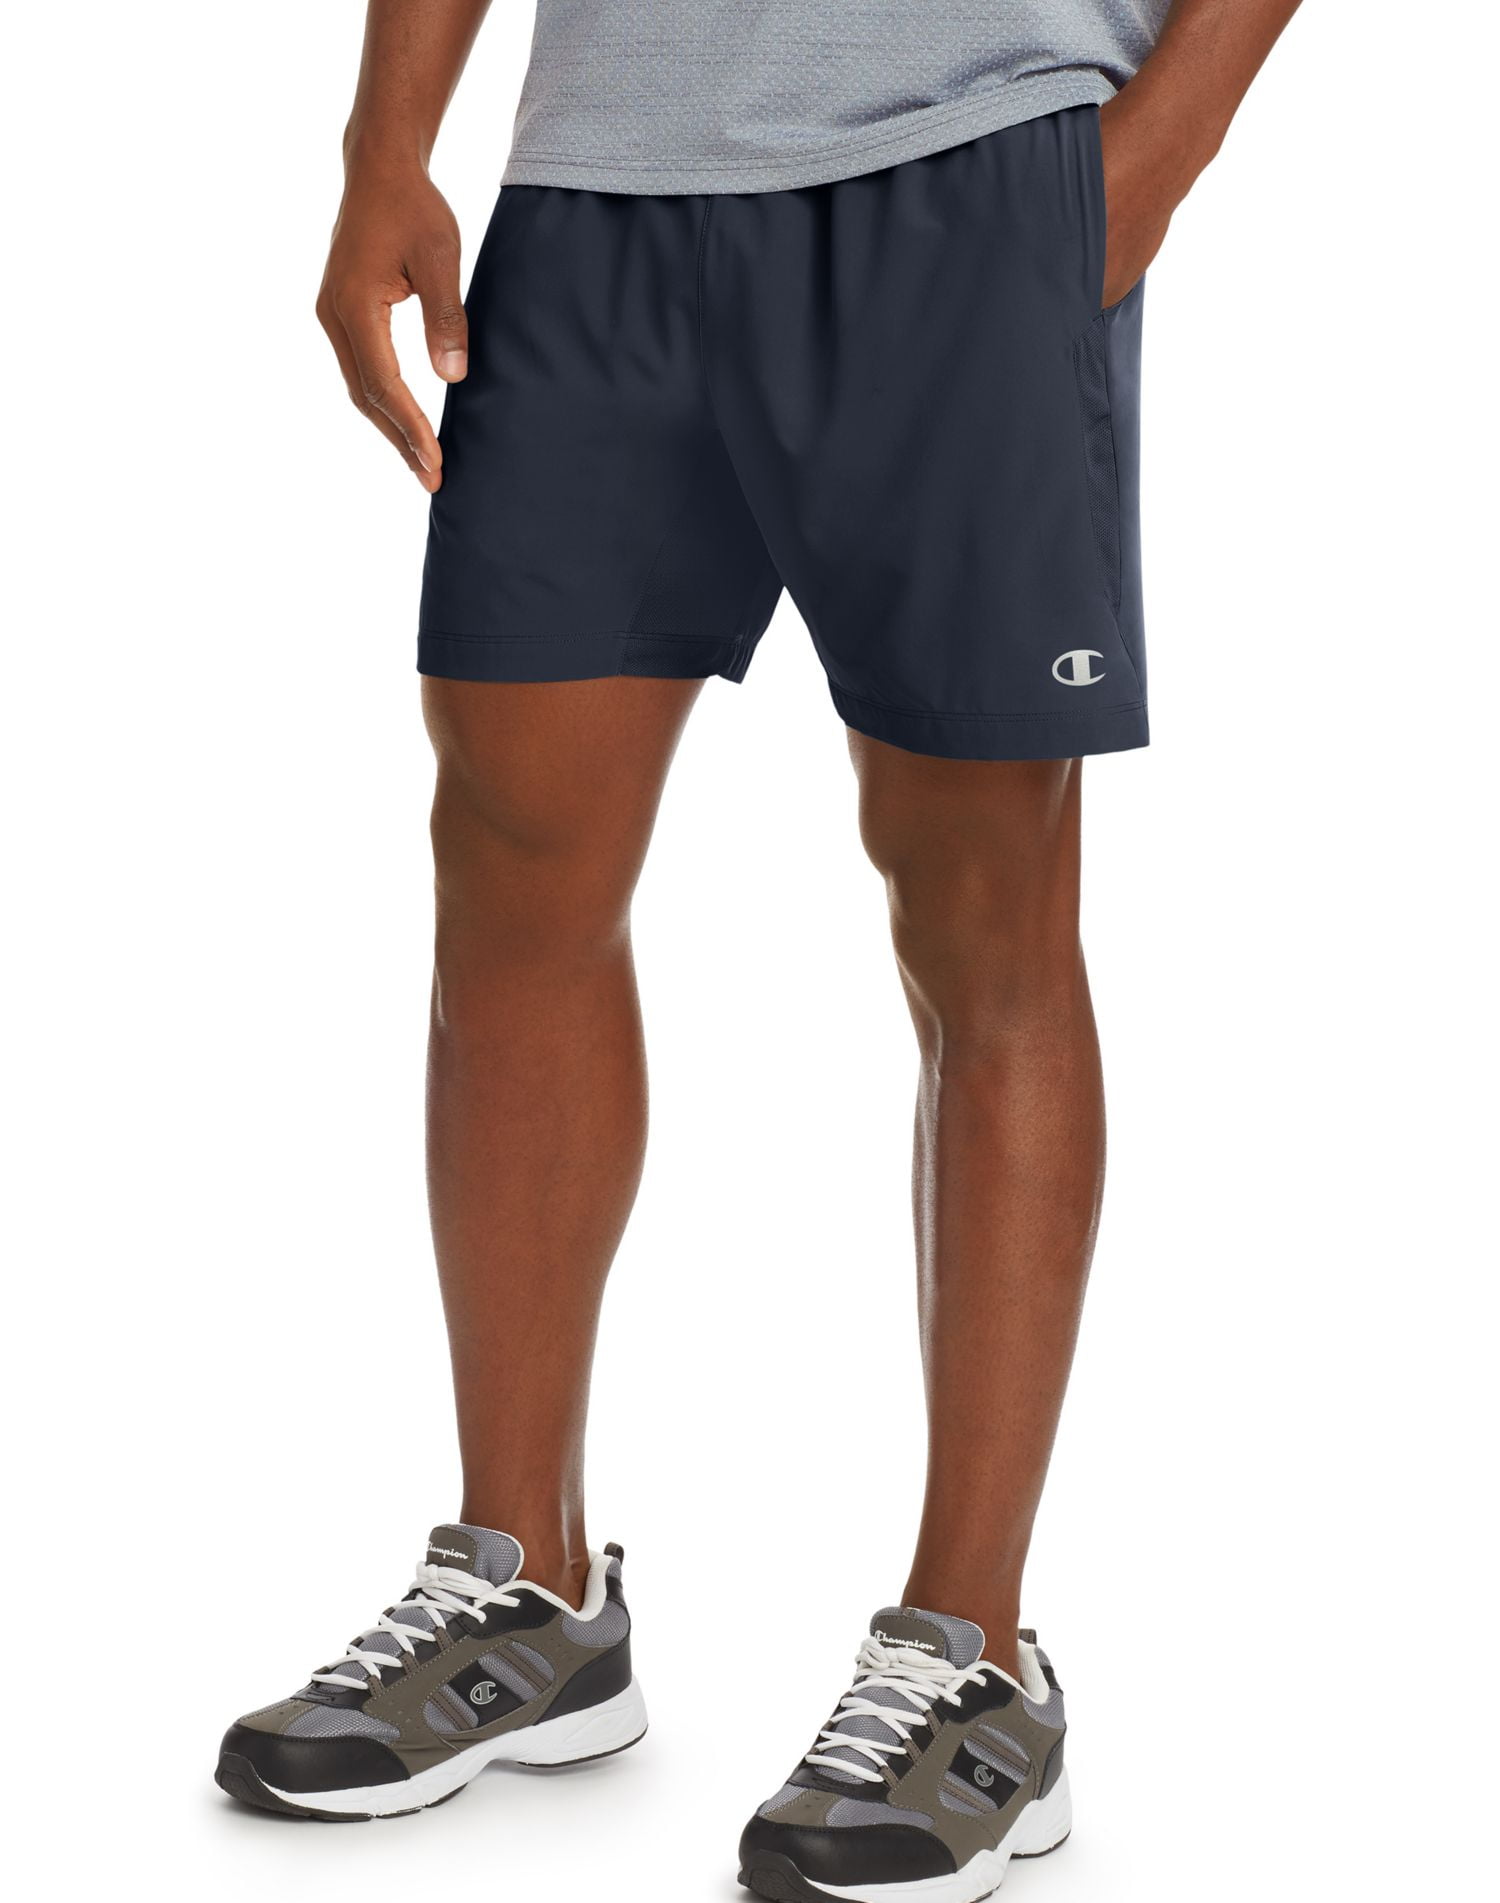 men's athletic shorts canada